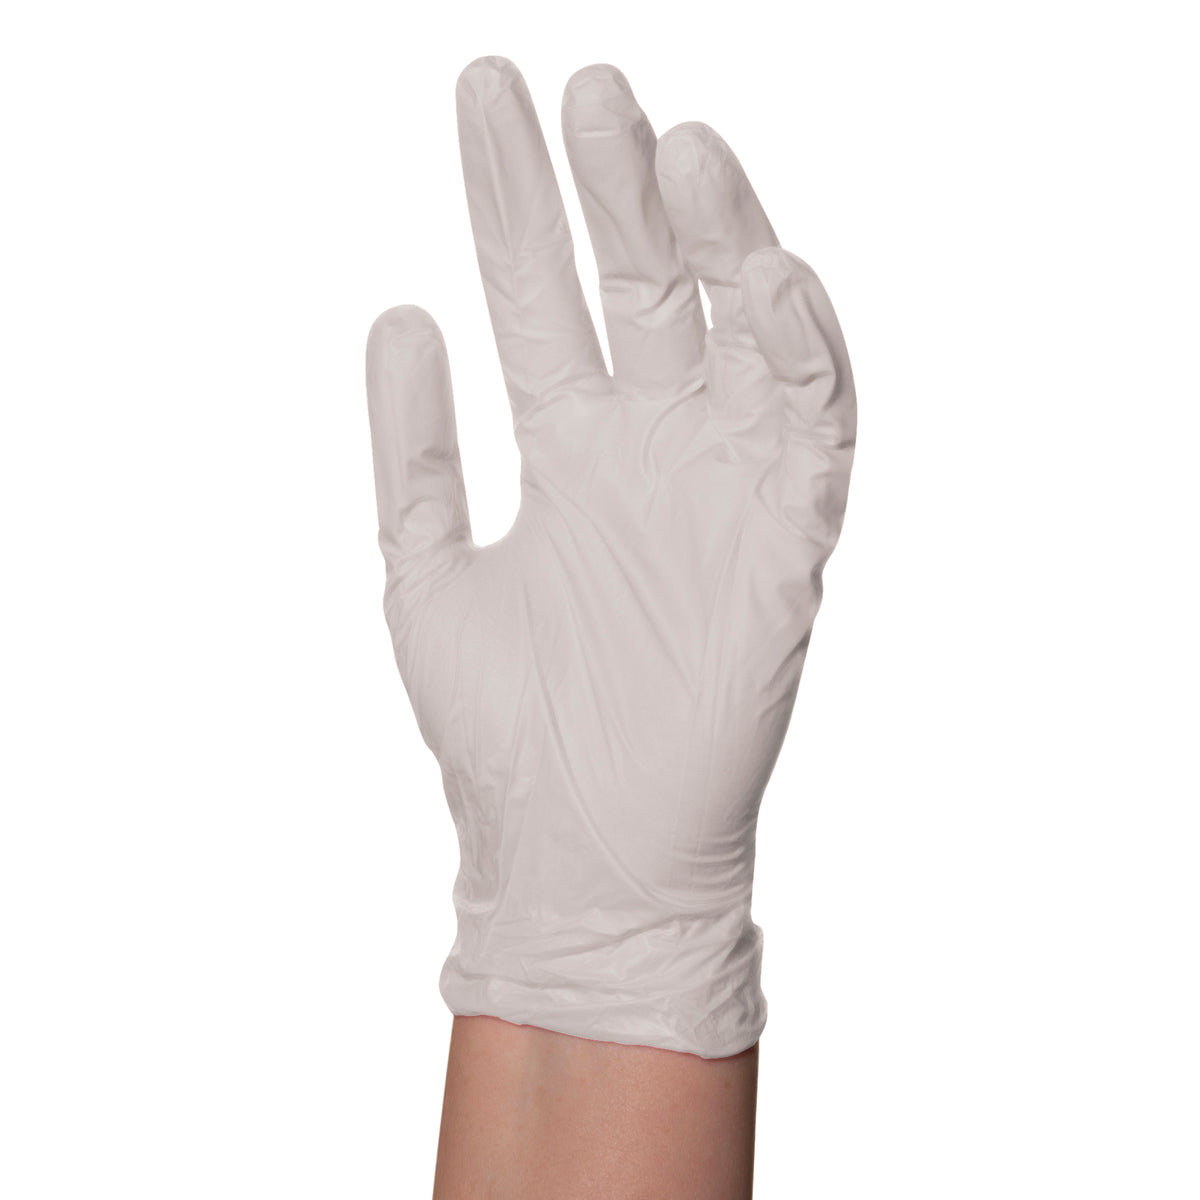 BaBylissPRO Disposable Vinyl Gloves, Medium – Box of 100